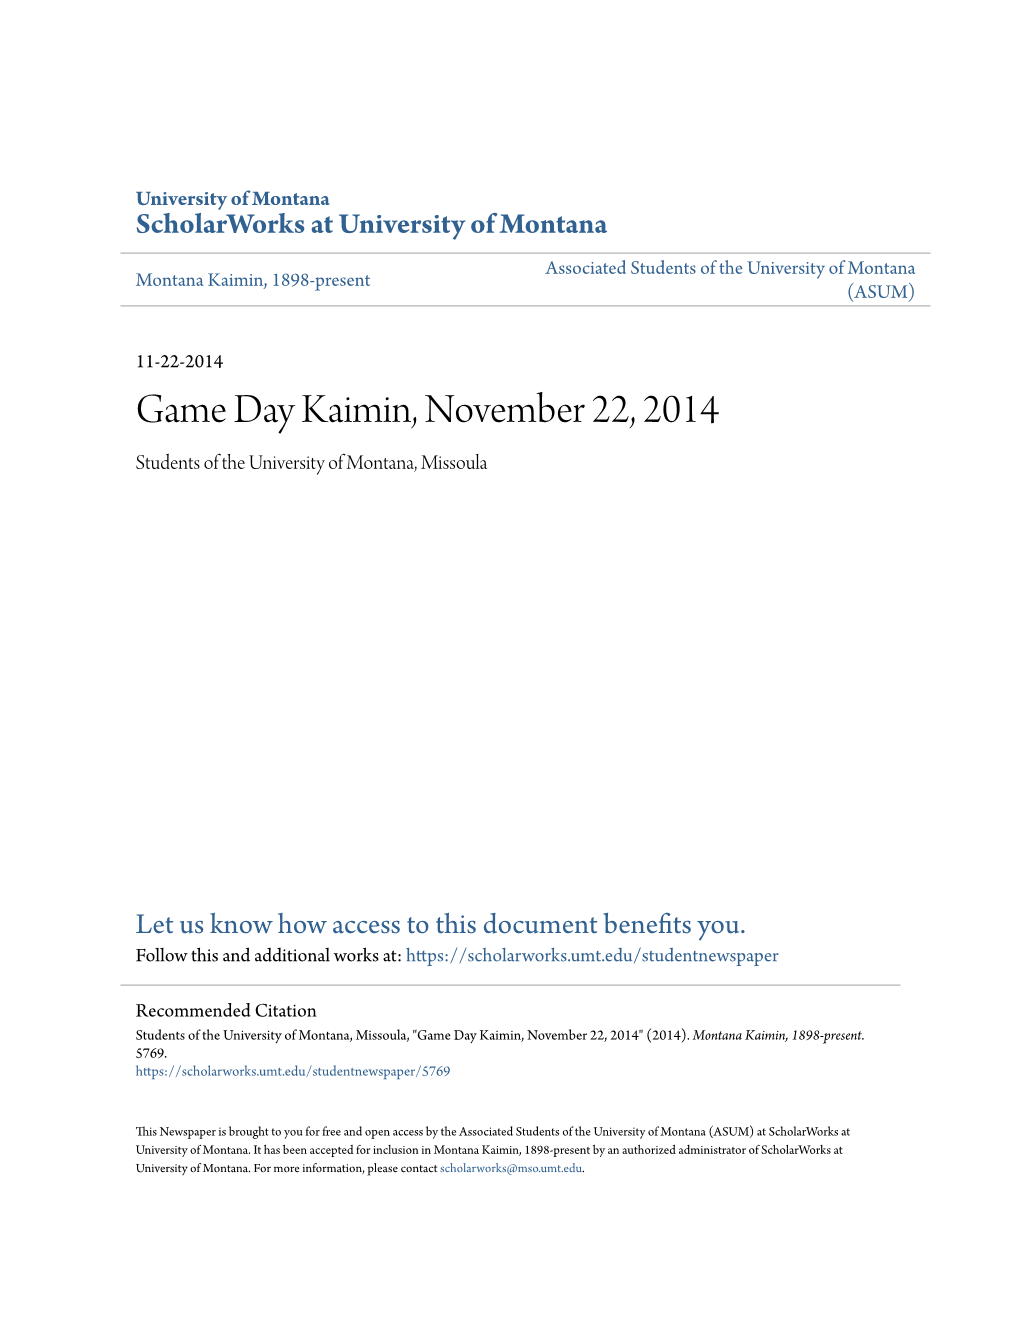 Game Day Kaimin, November 22, 2014 Students of the University of Montana, Missoula